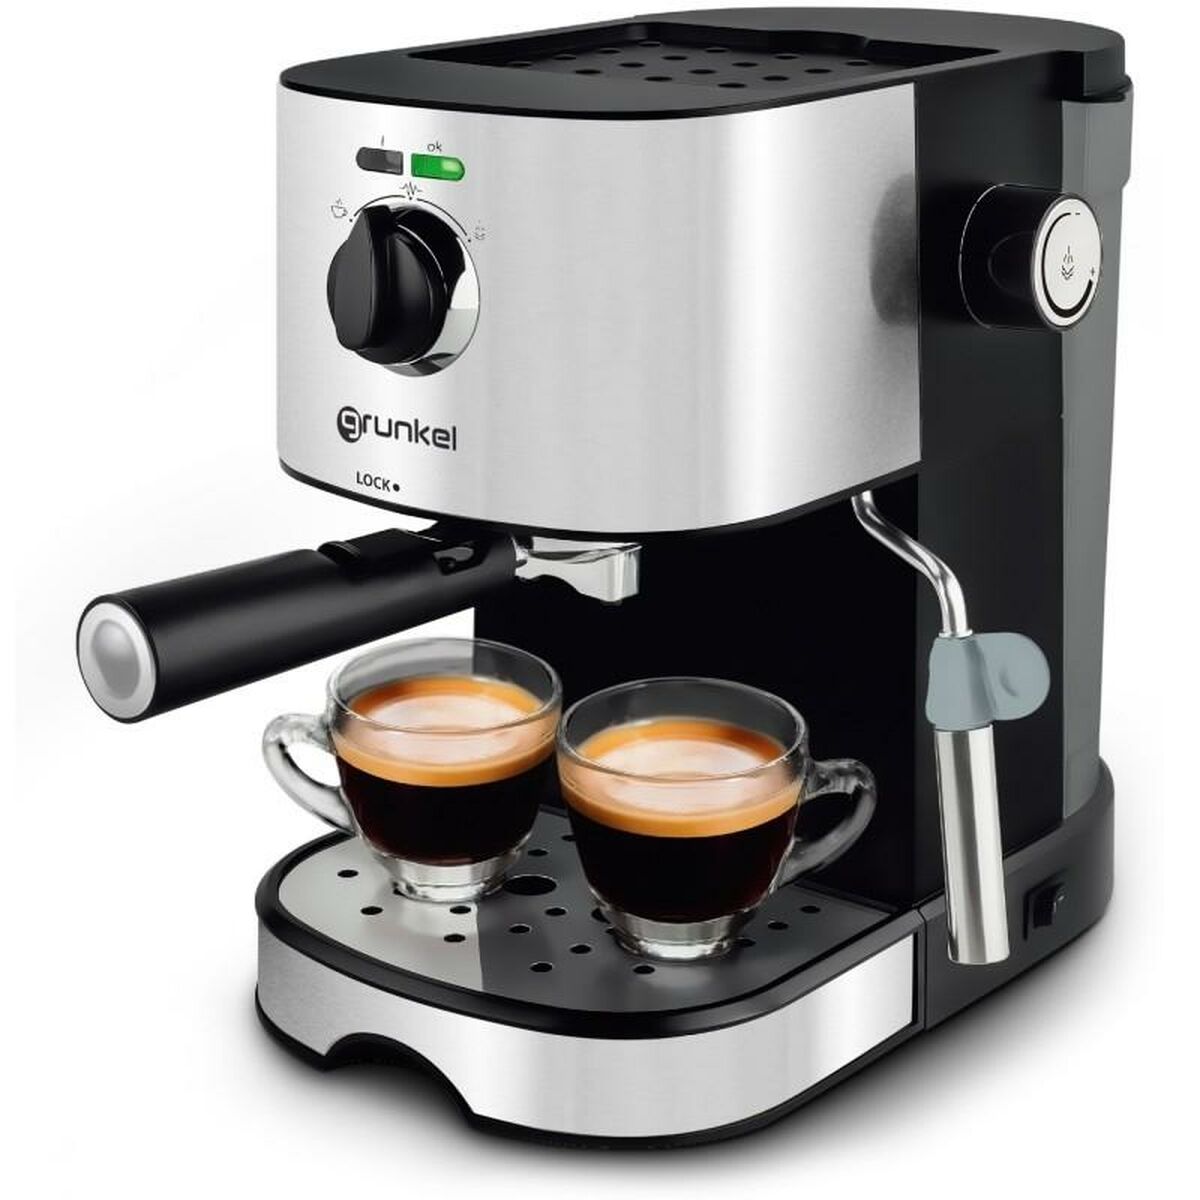 Filterkaffeemaschine Grunkel Silberfarben 850 W 1 L - CA International 